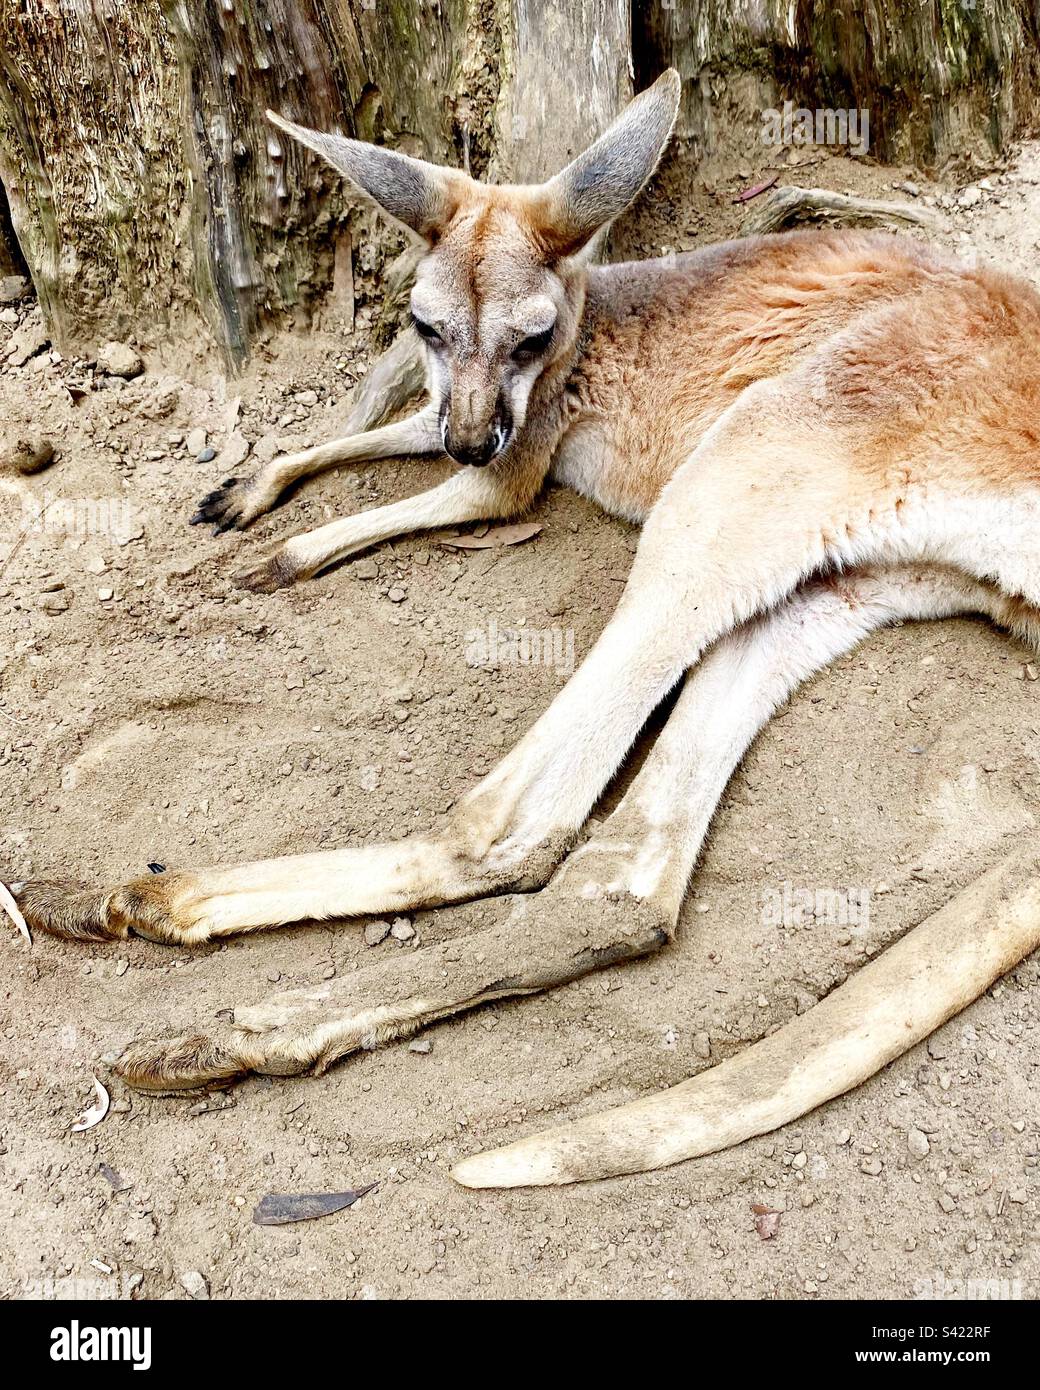 Young Kangaroo from Australia Stock Photo